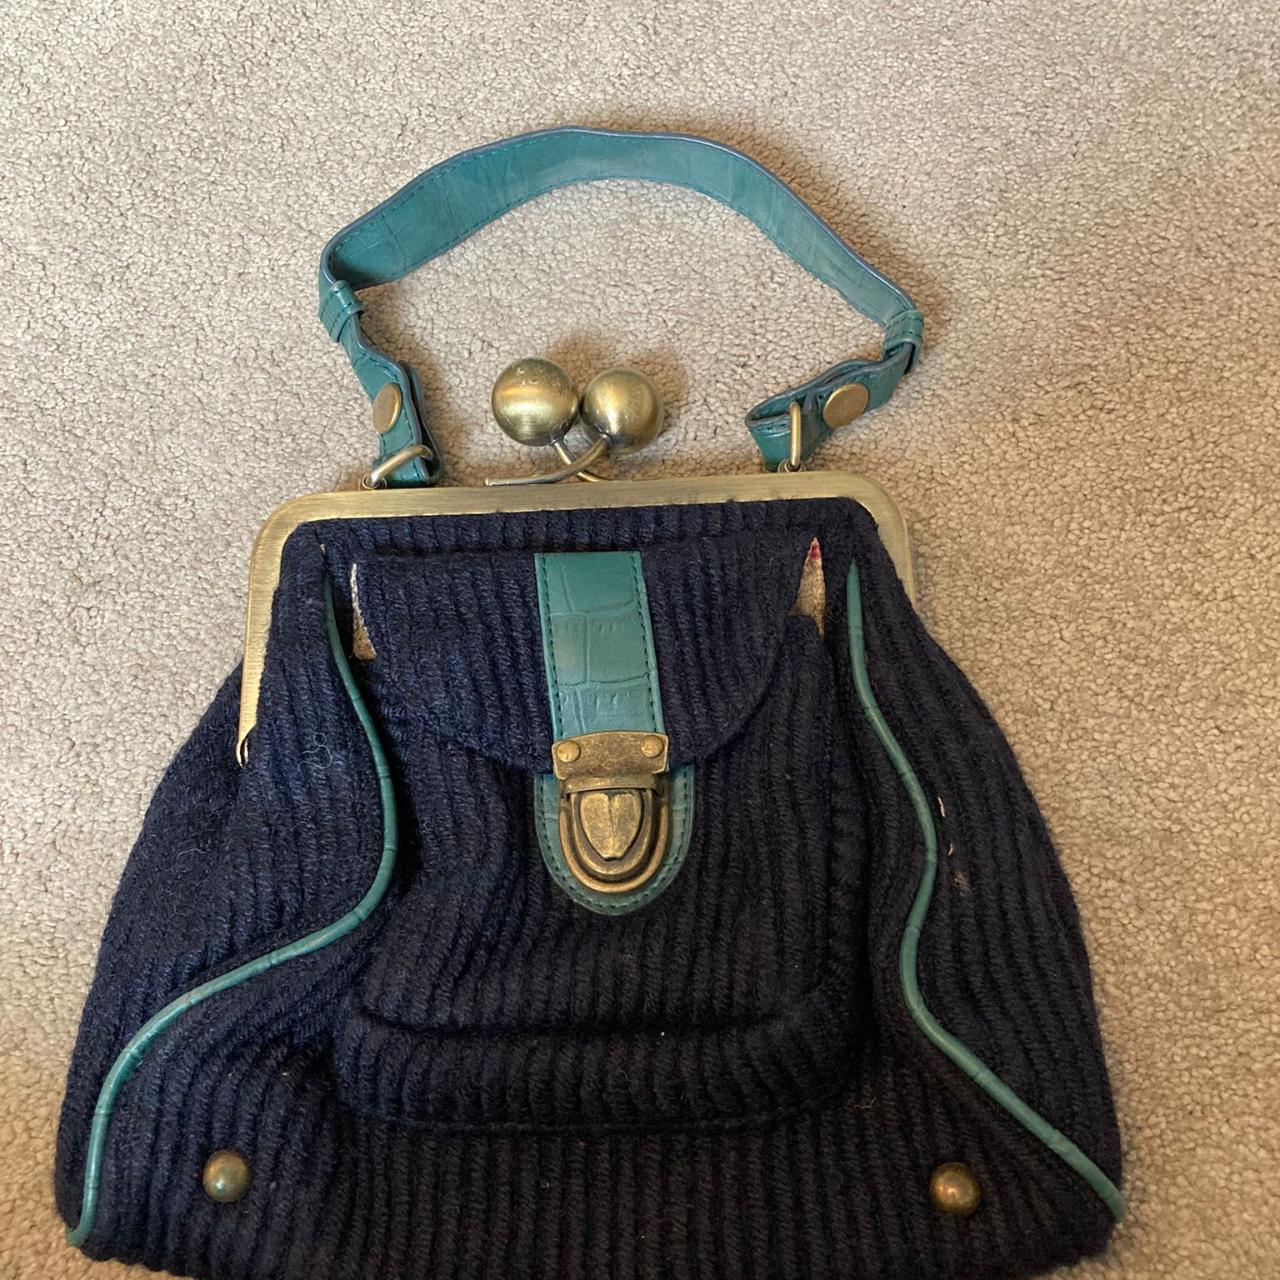 Product Image 1 - KG navy cord purse bag.
Slight